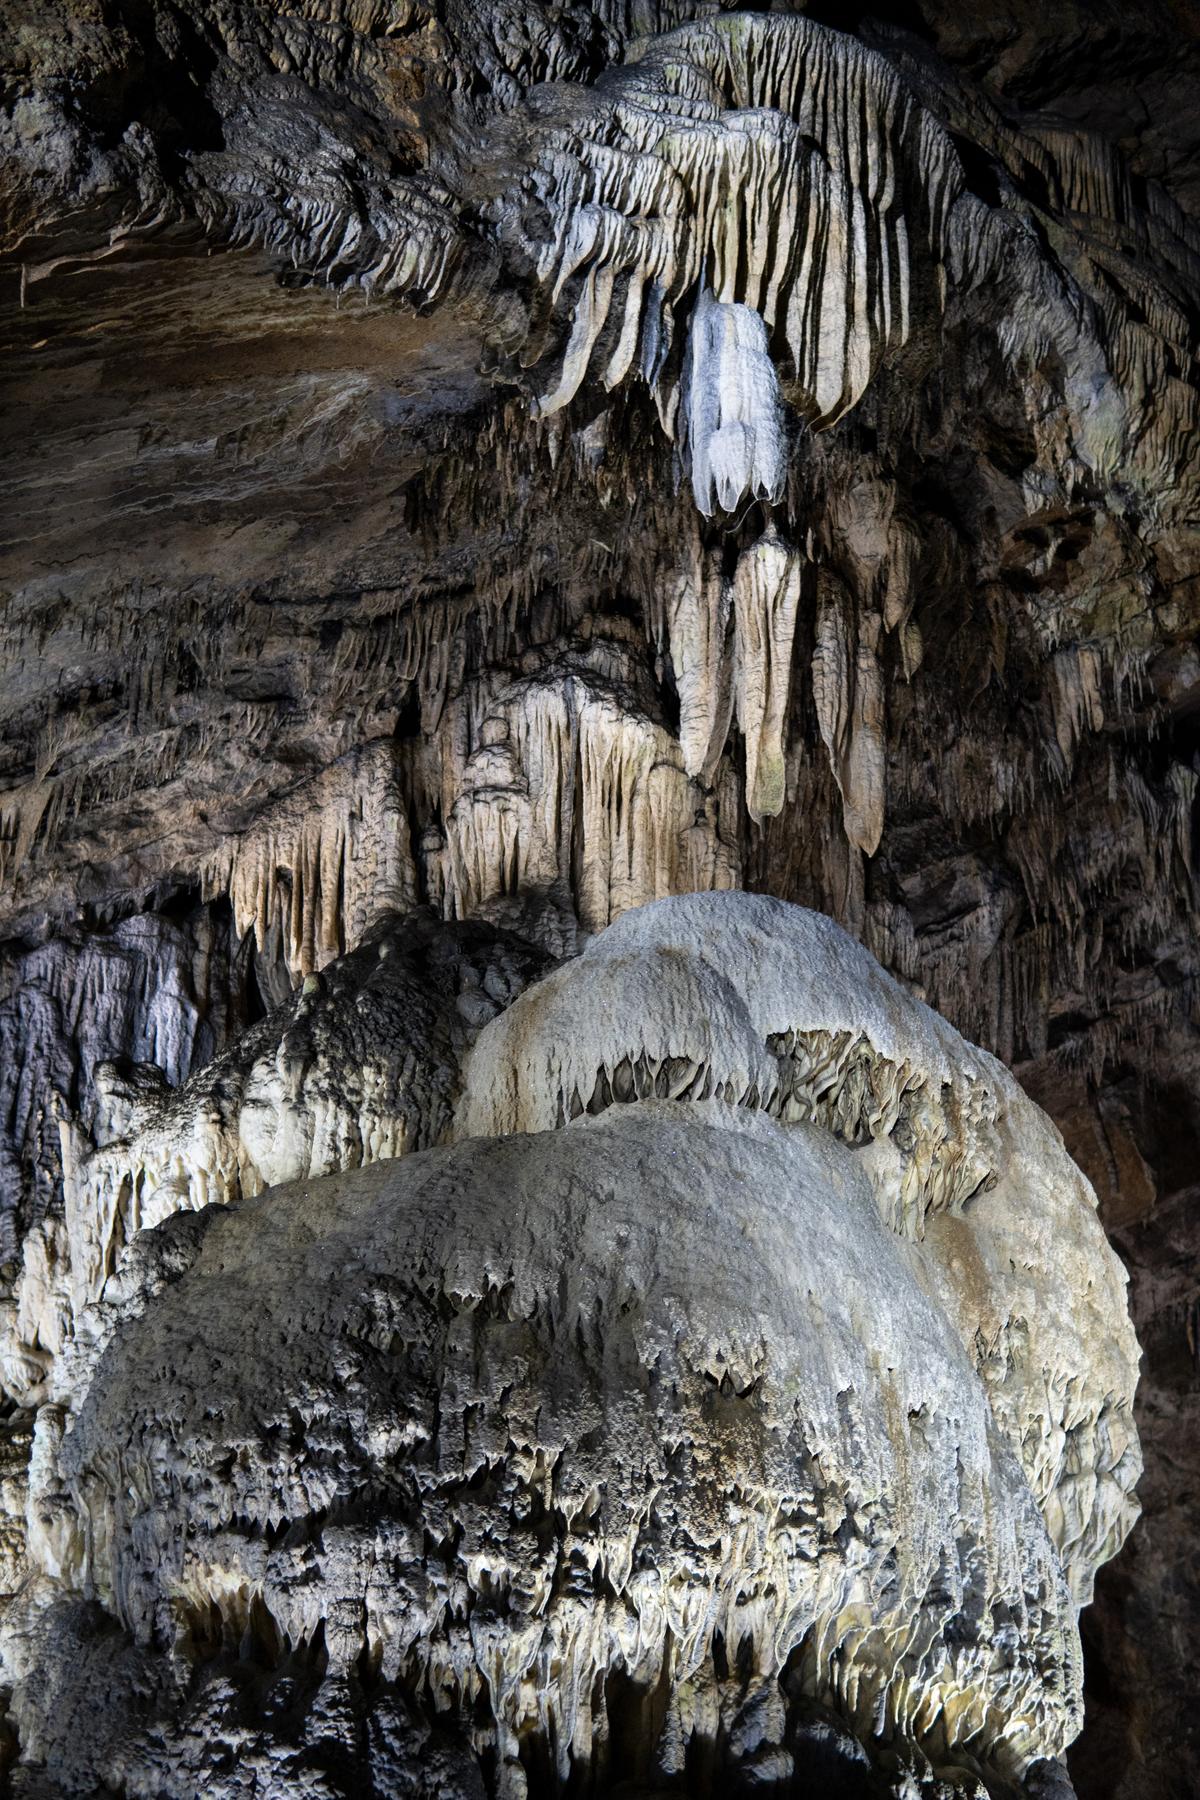 Cayman Crystal Caves-Ilhas Cayman, phot de Hubert Buratynski